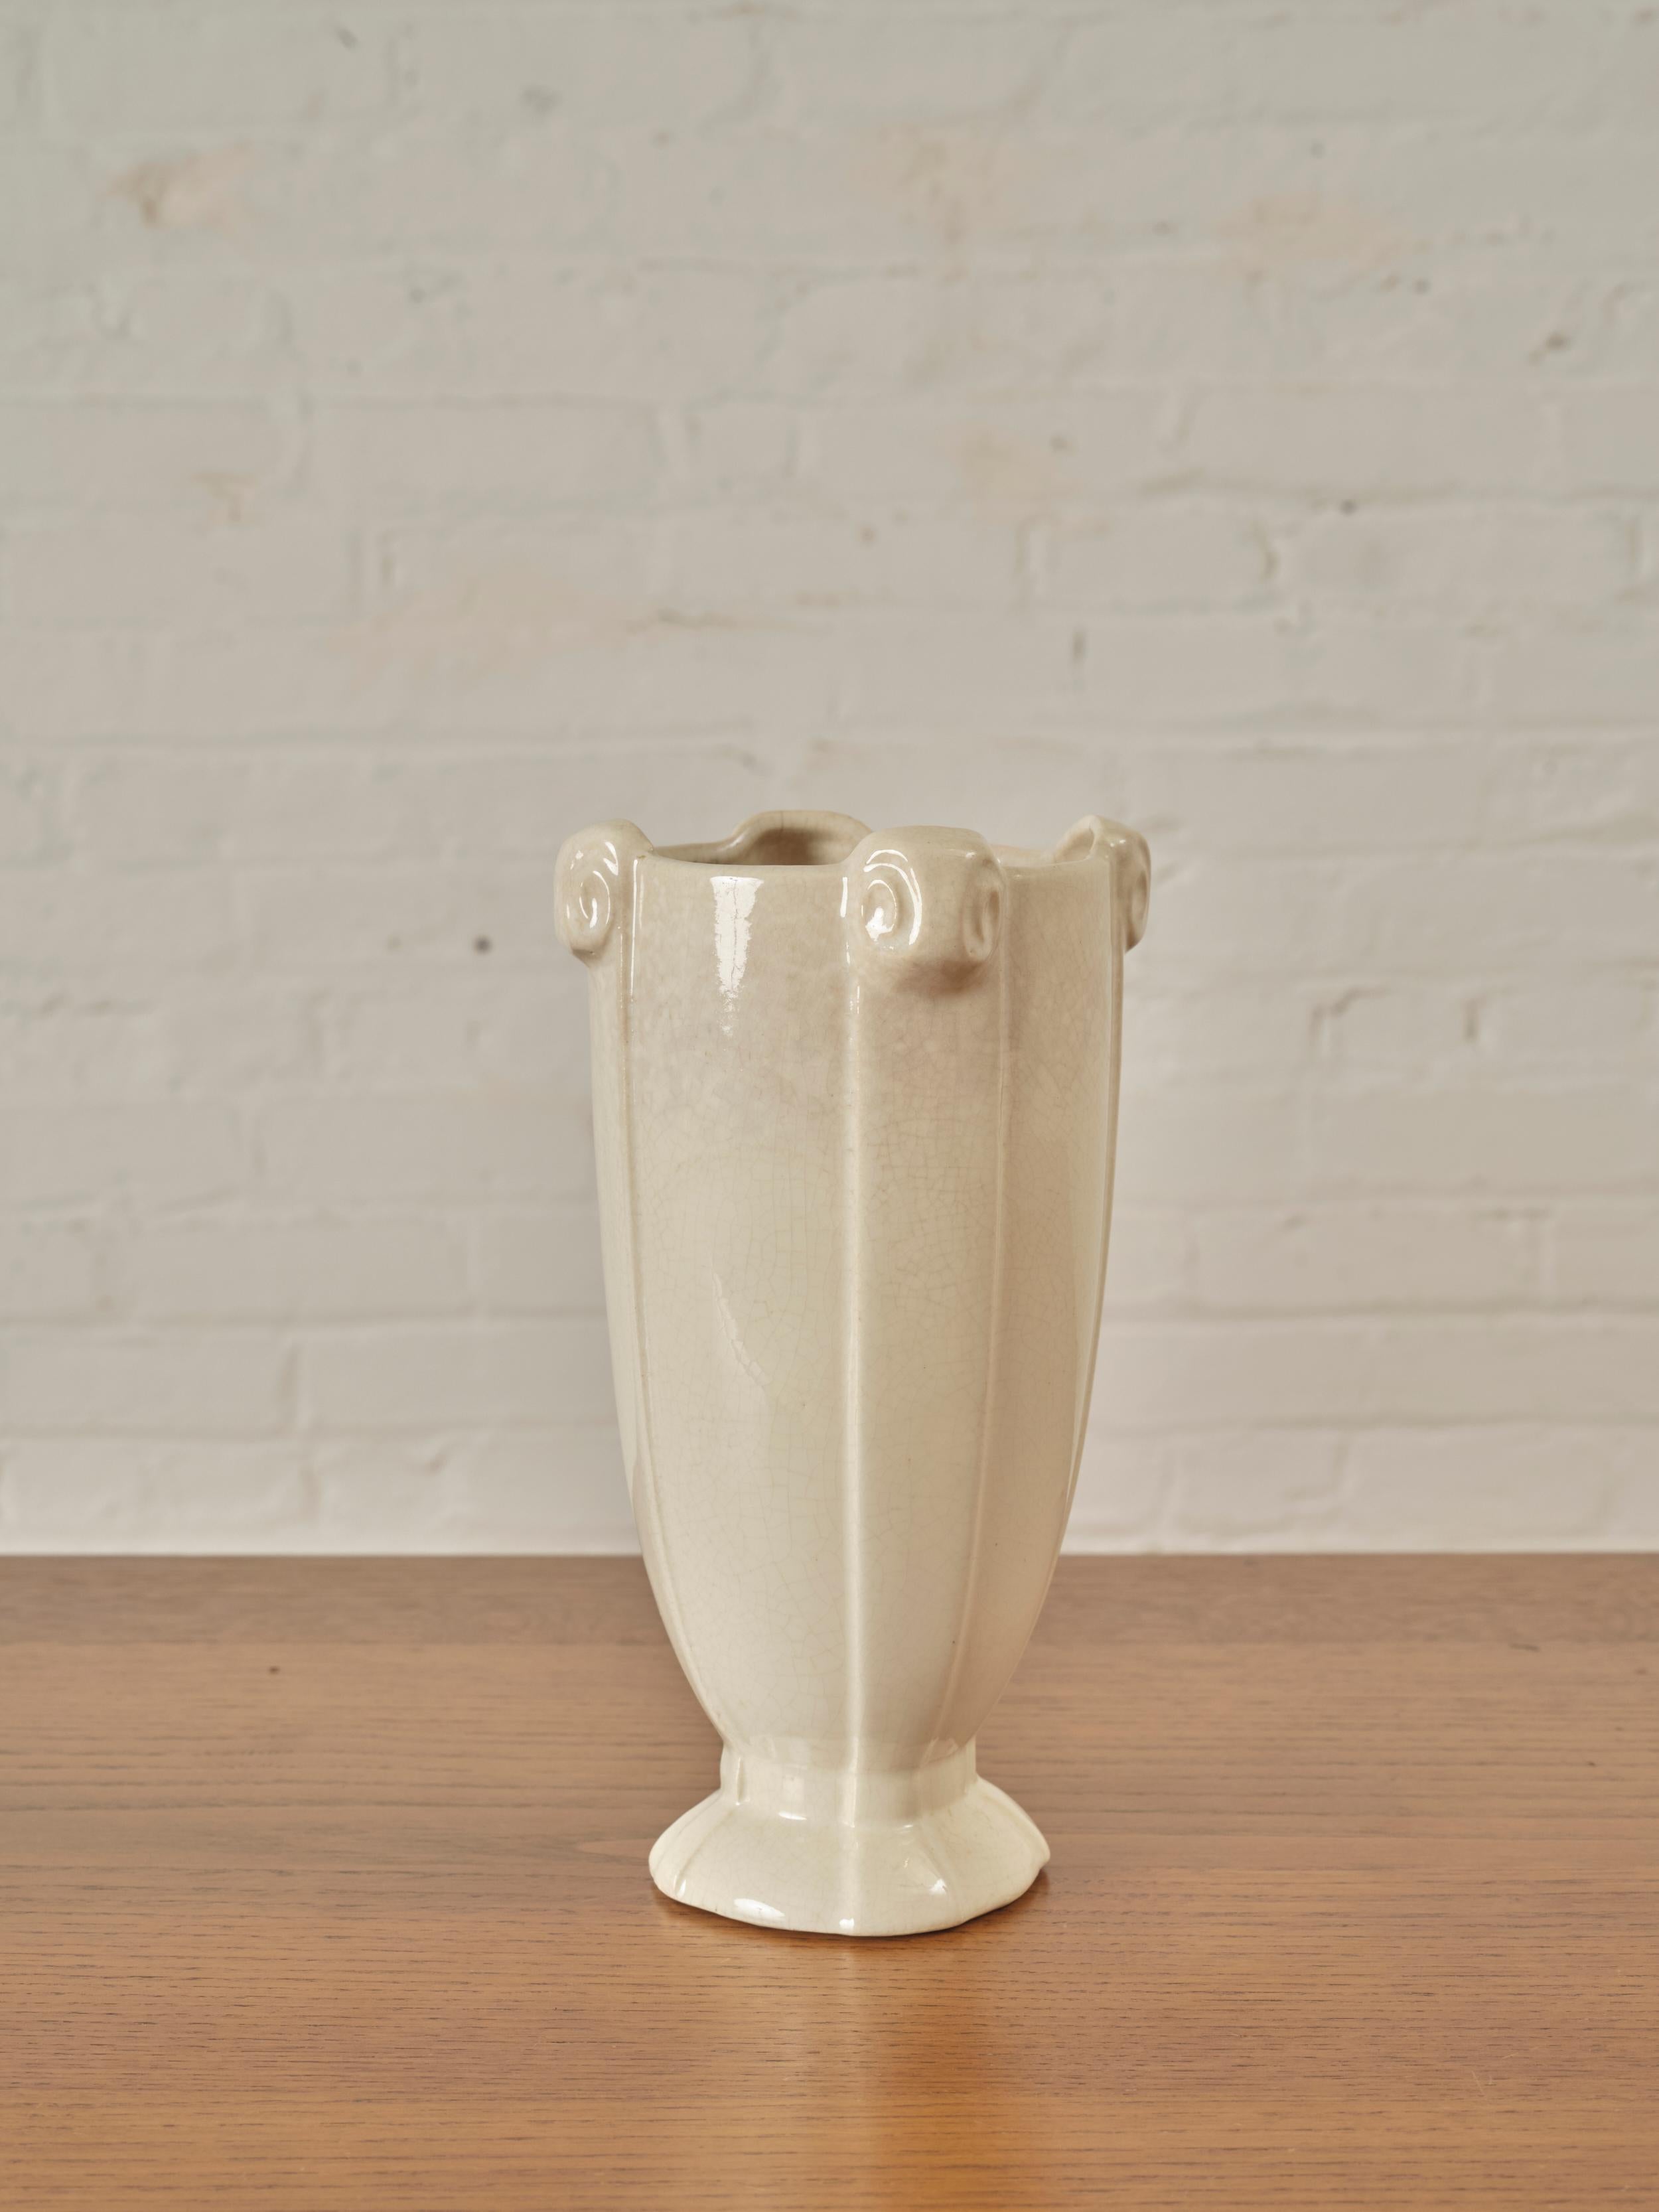 Glazed Vase by McCoy Pottery. Markings on the underside

